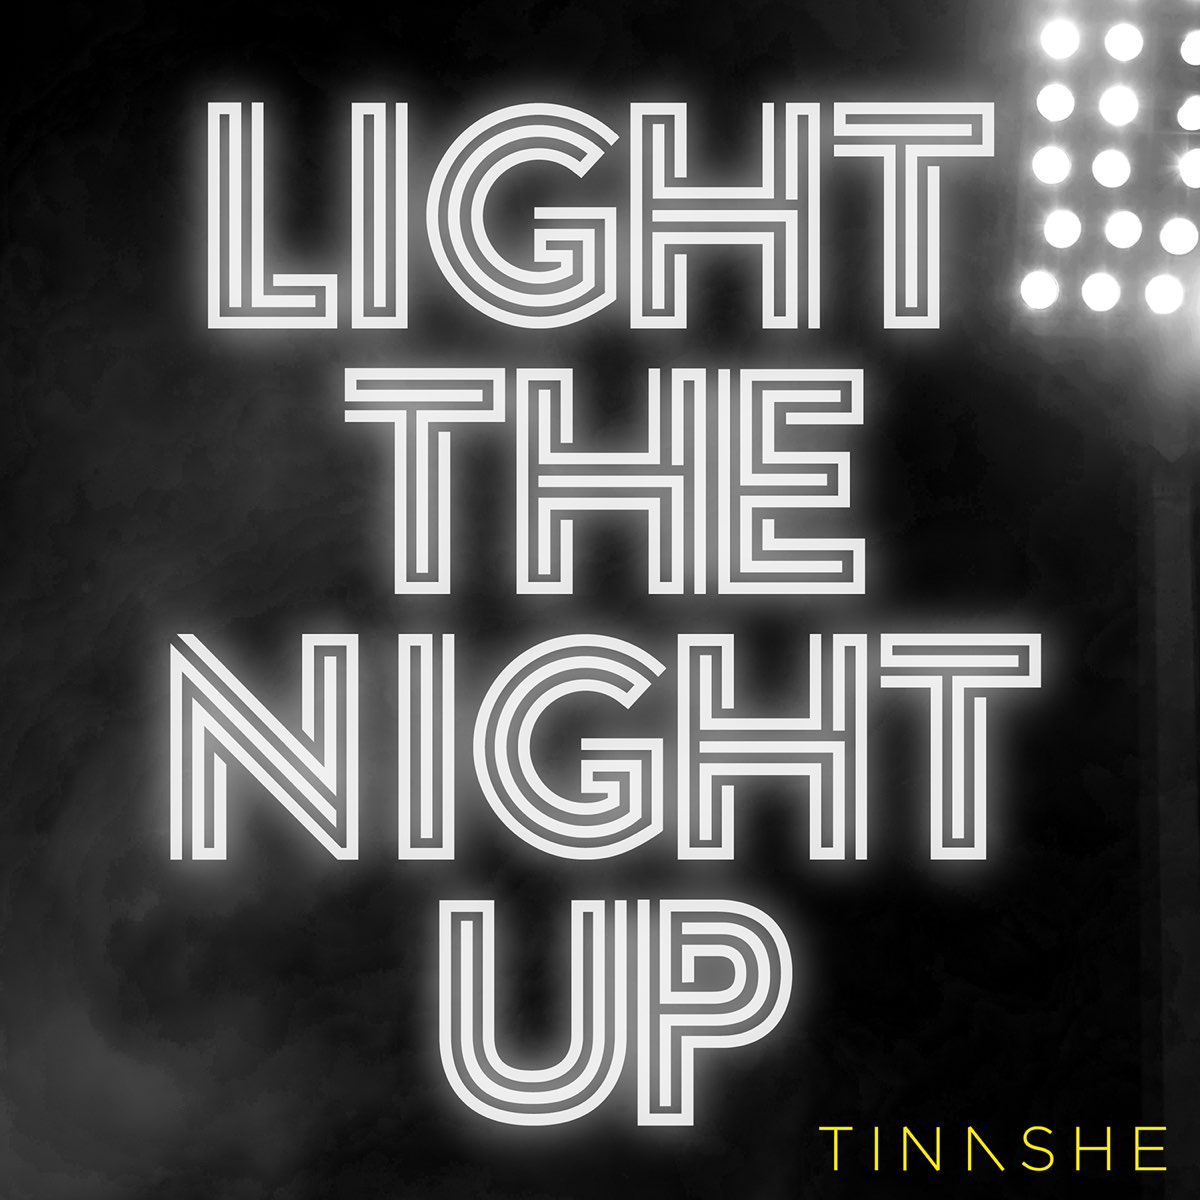 Life night up. The Light in the Night текст. Light up the Night. Tinashe Aquarius. Песня Light Night.